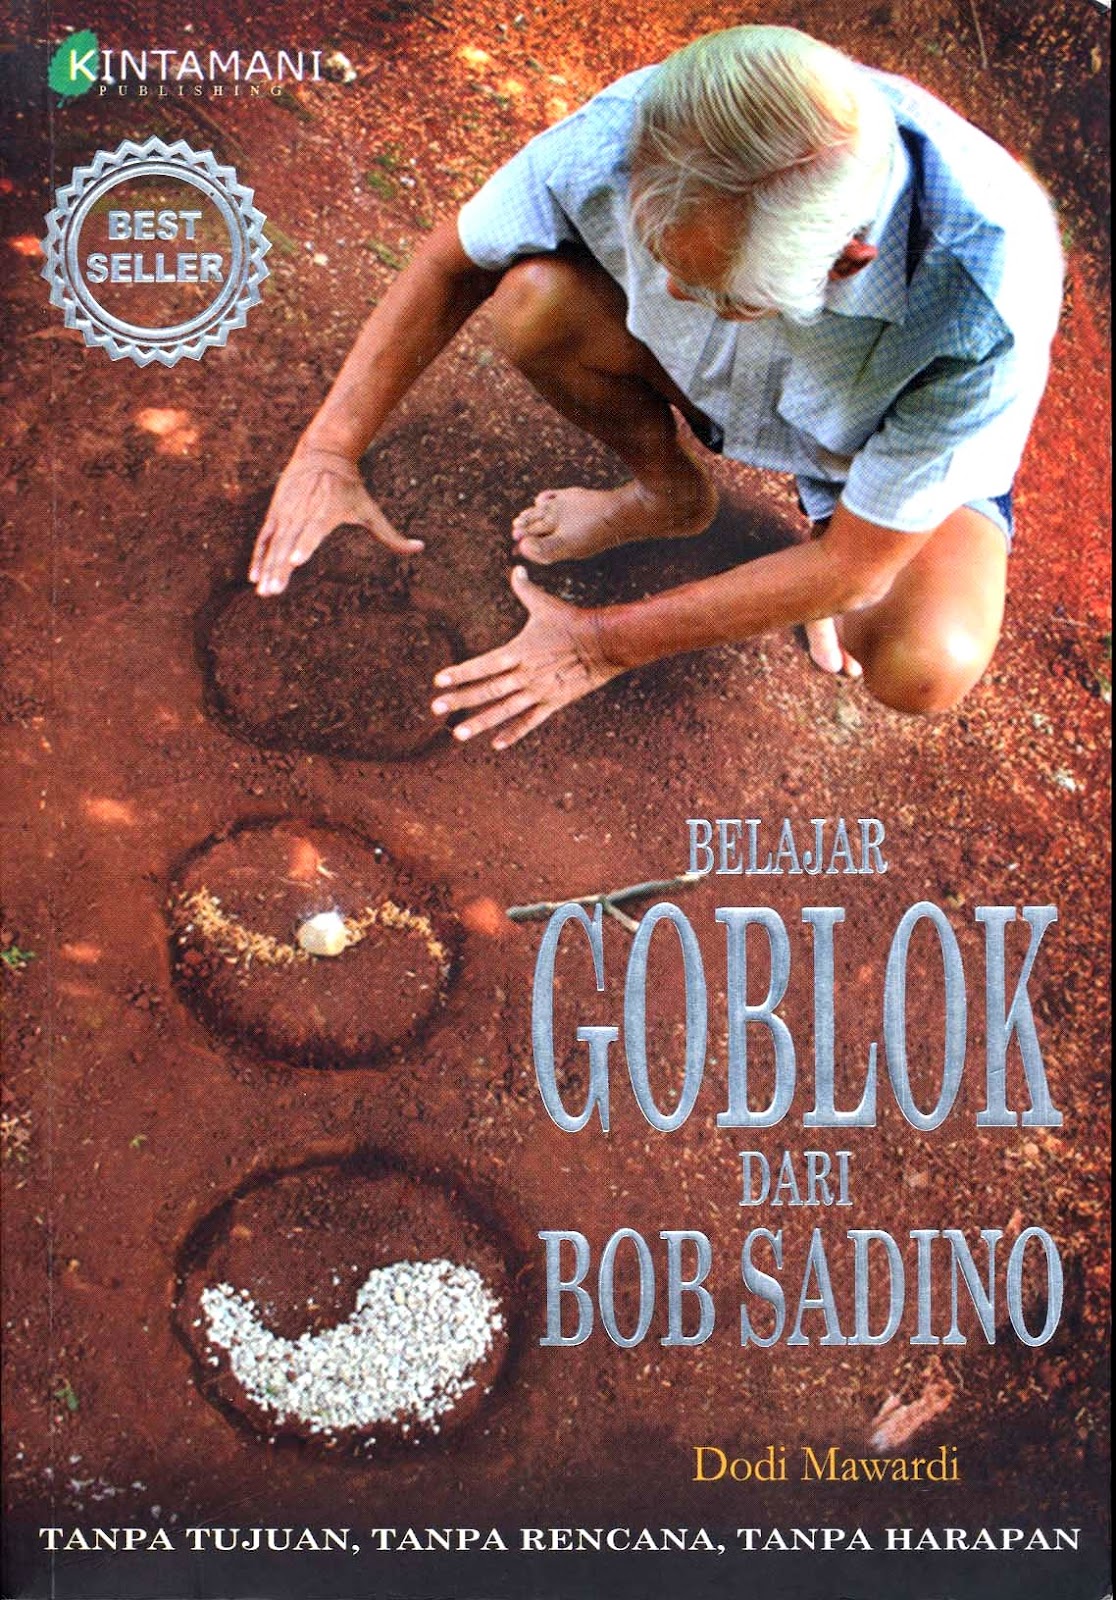 MUNGKOPAS Resensi Buku Belajar Goblok Dari Bob Sadino